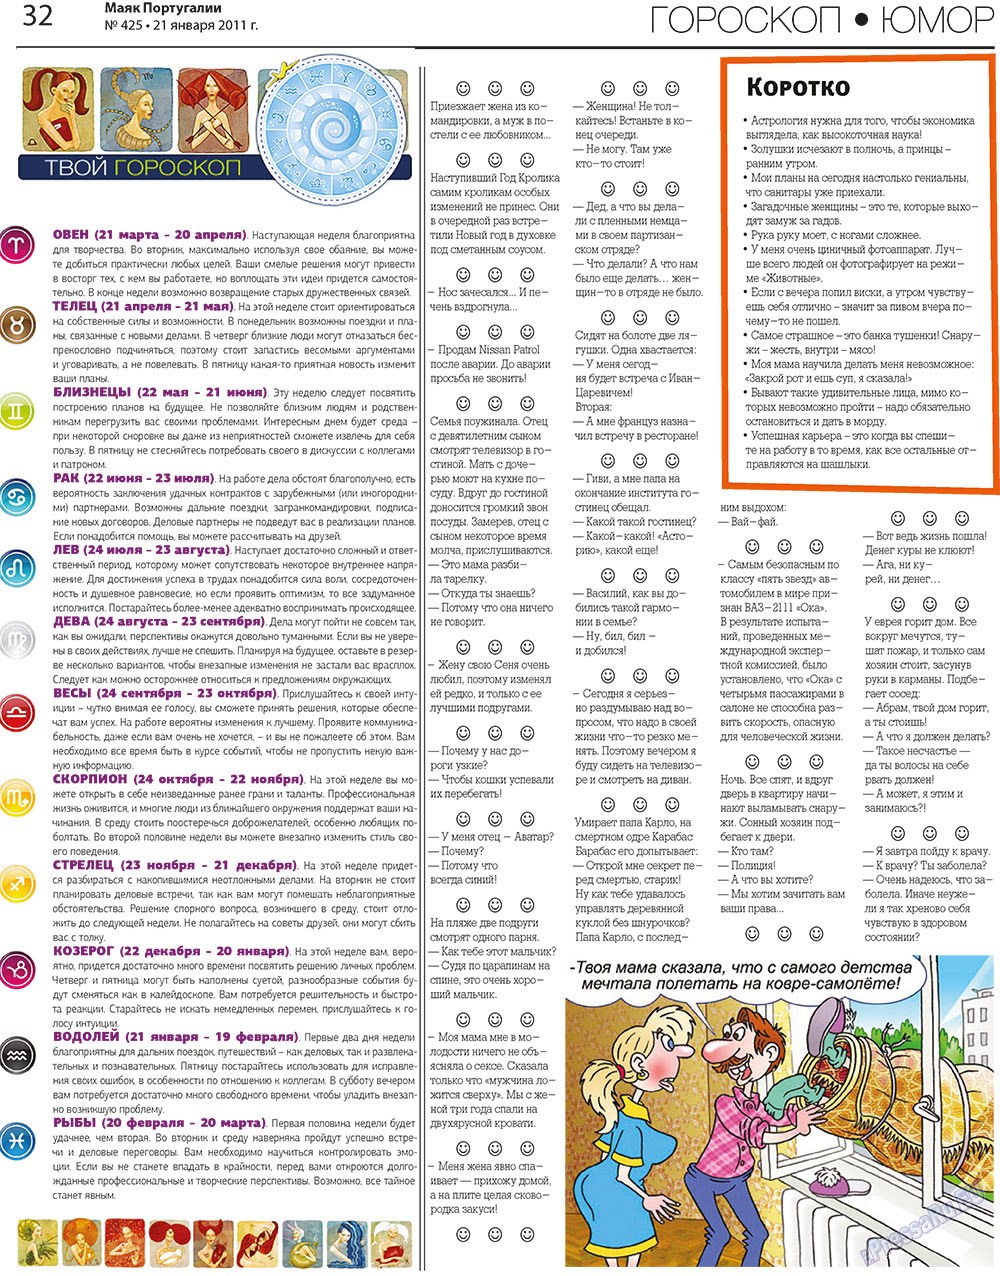 Маяк Португалии, газета. 2011 №425 стр.32